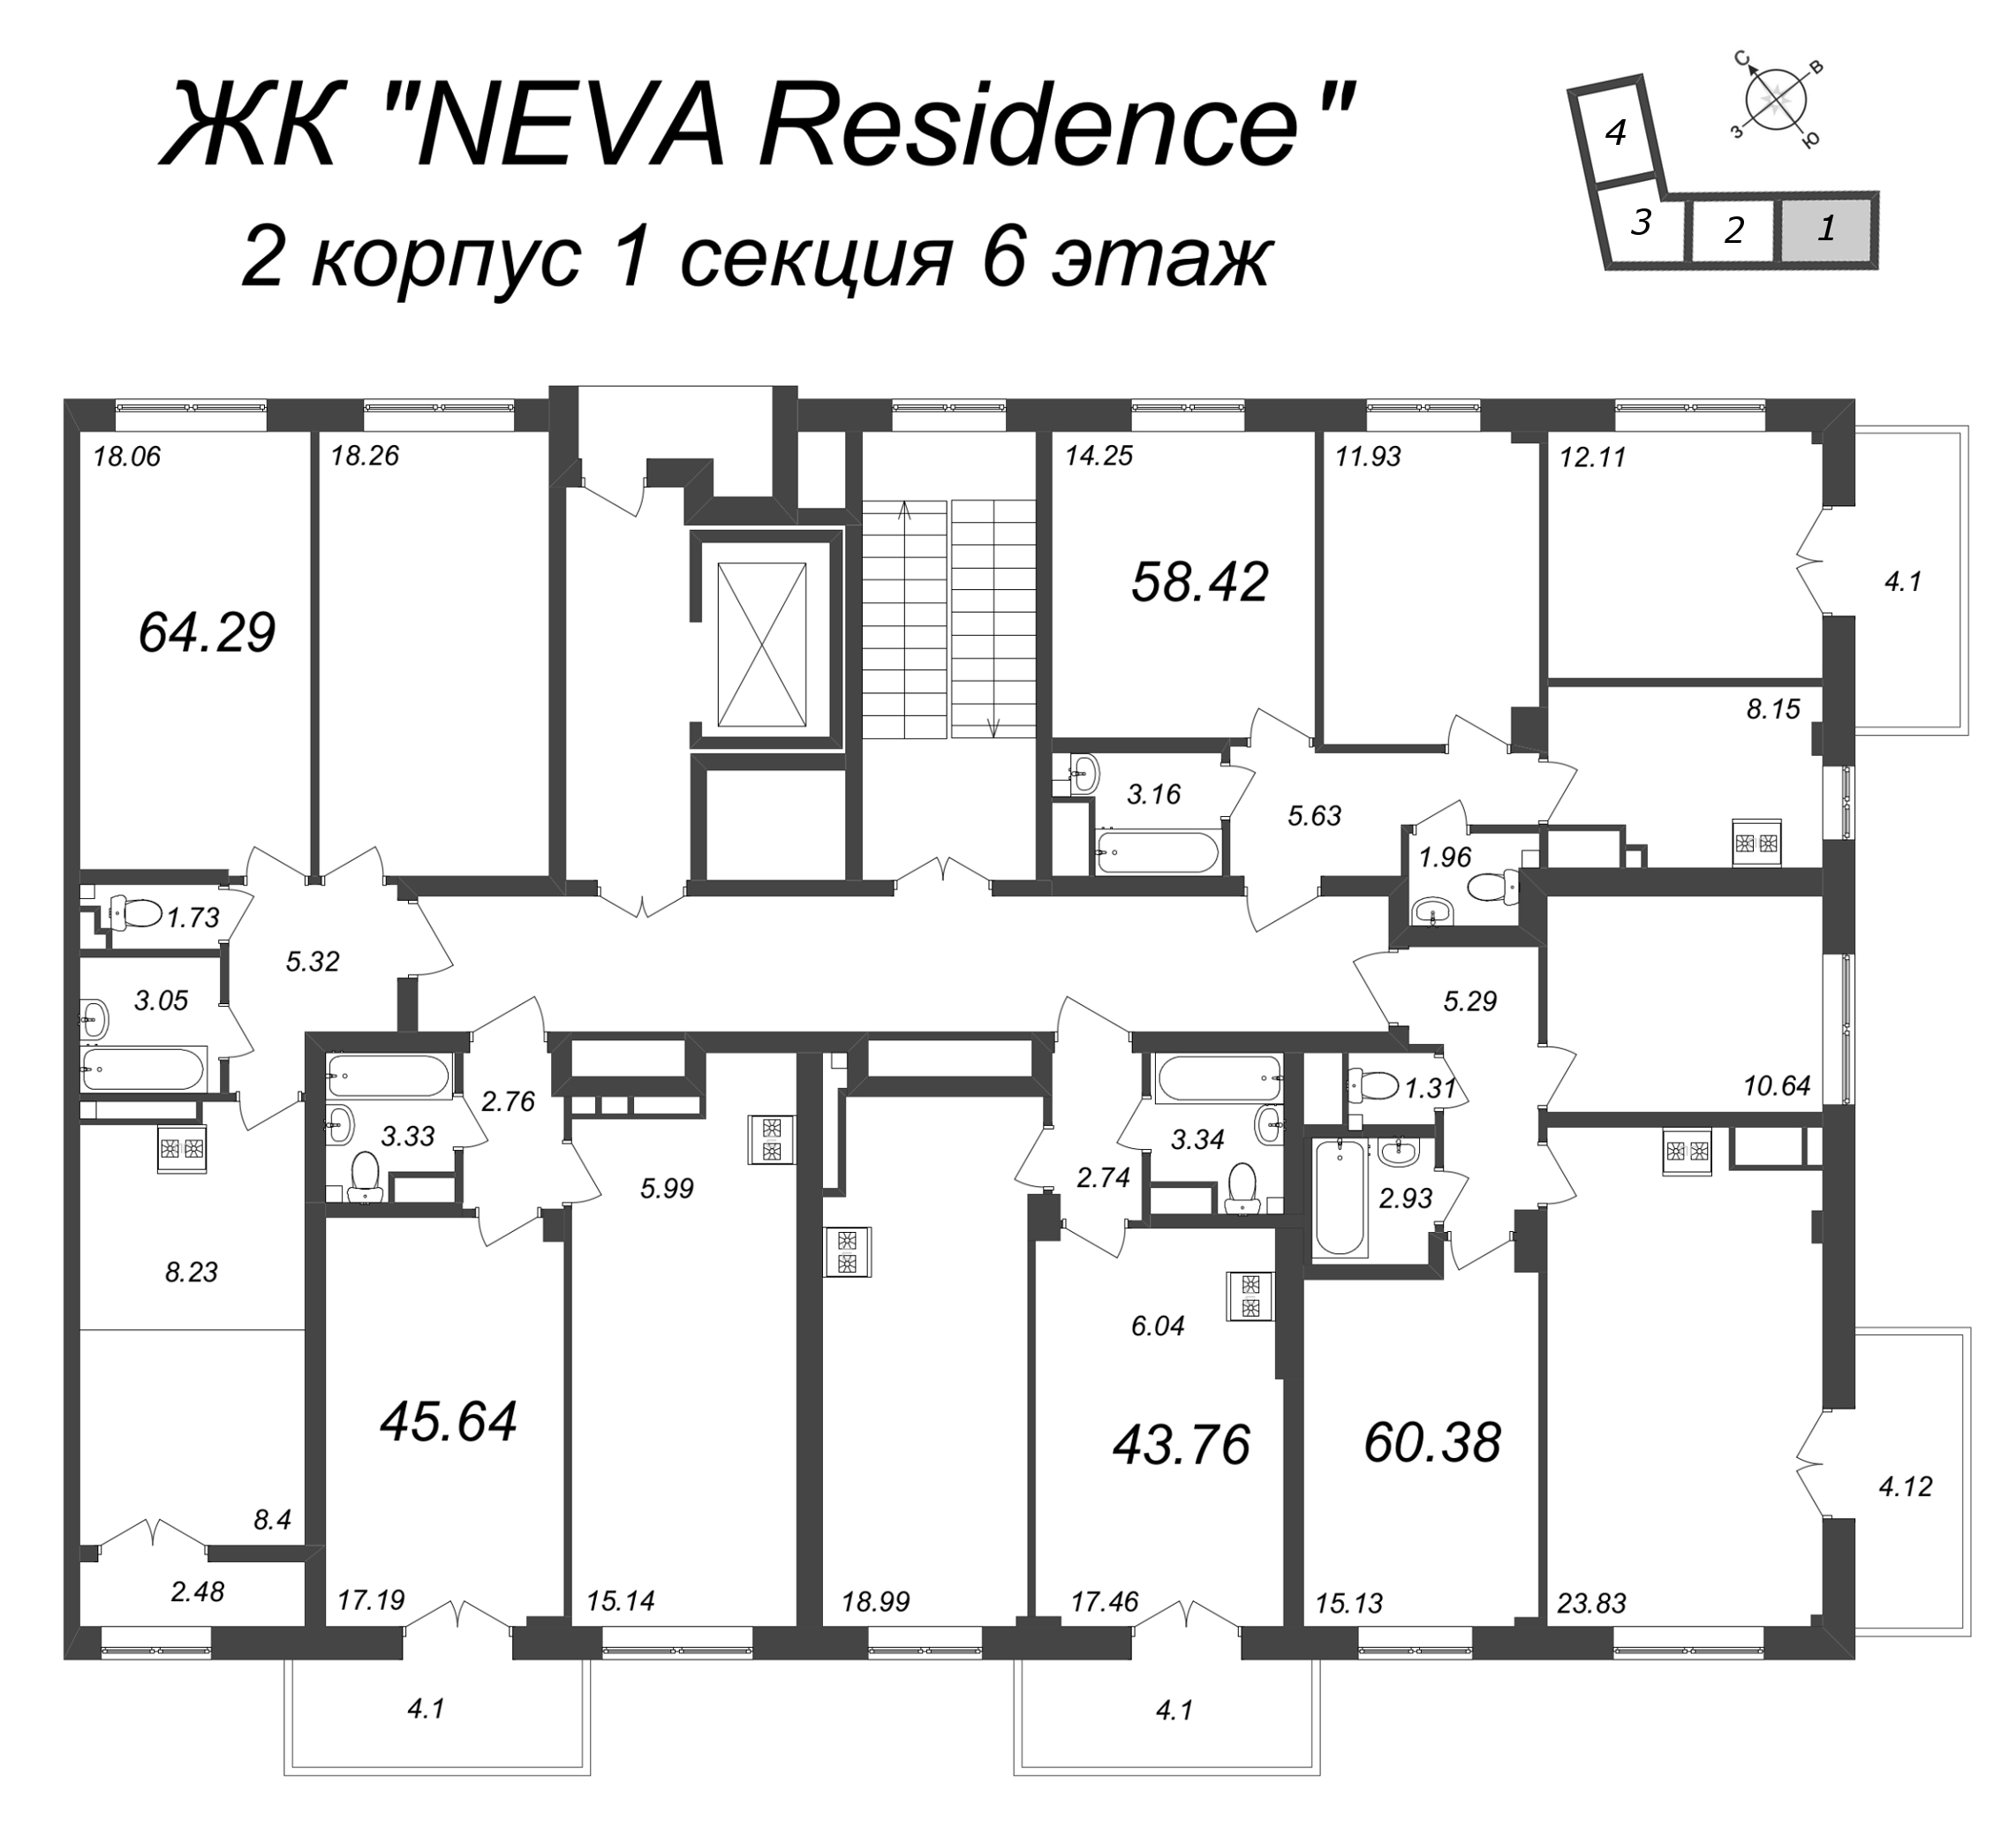 2-комнатная (Евро) квартира, 43.76 м² - планировка этажа